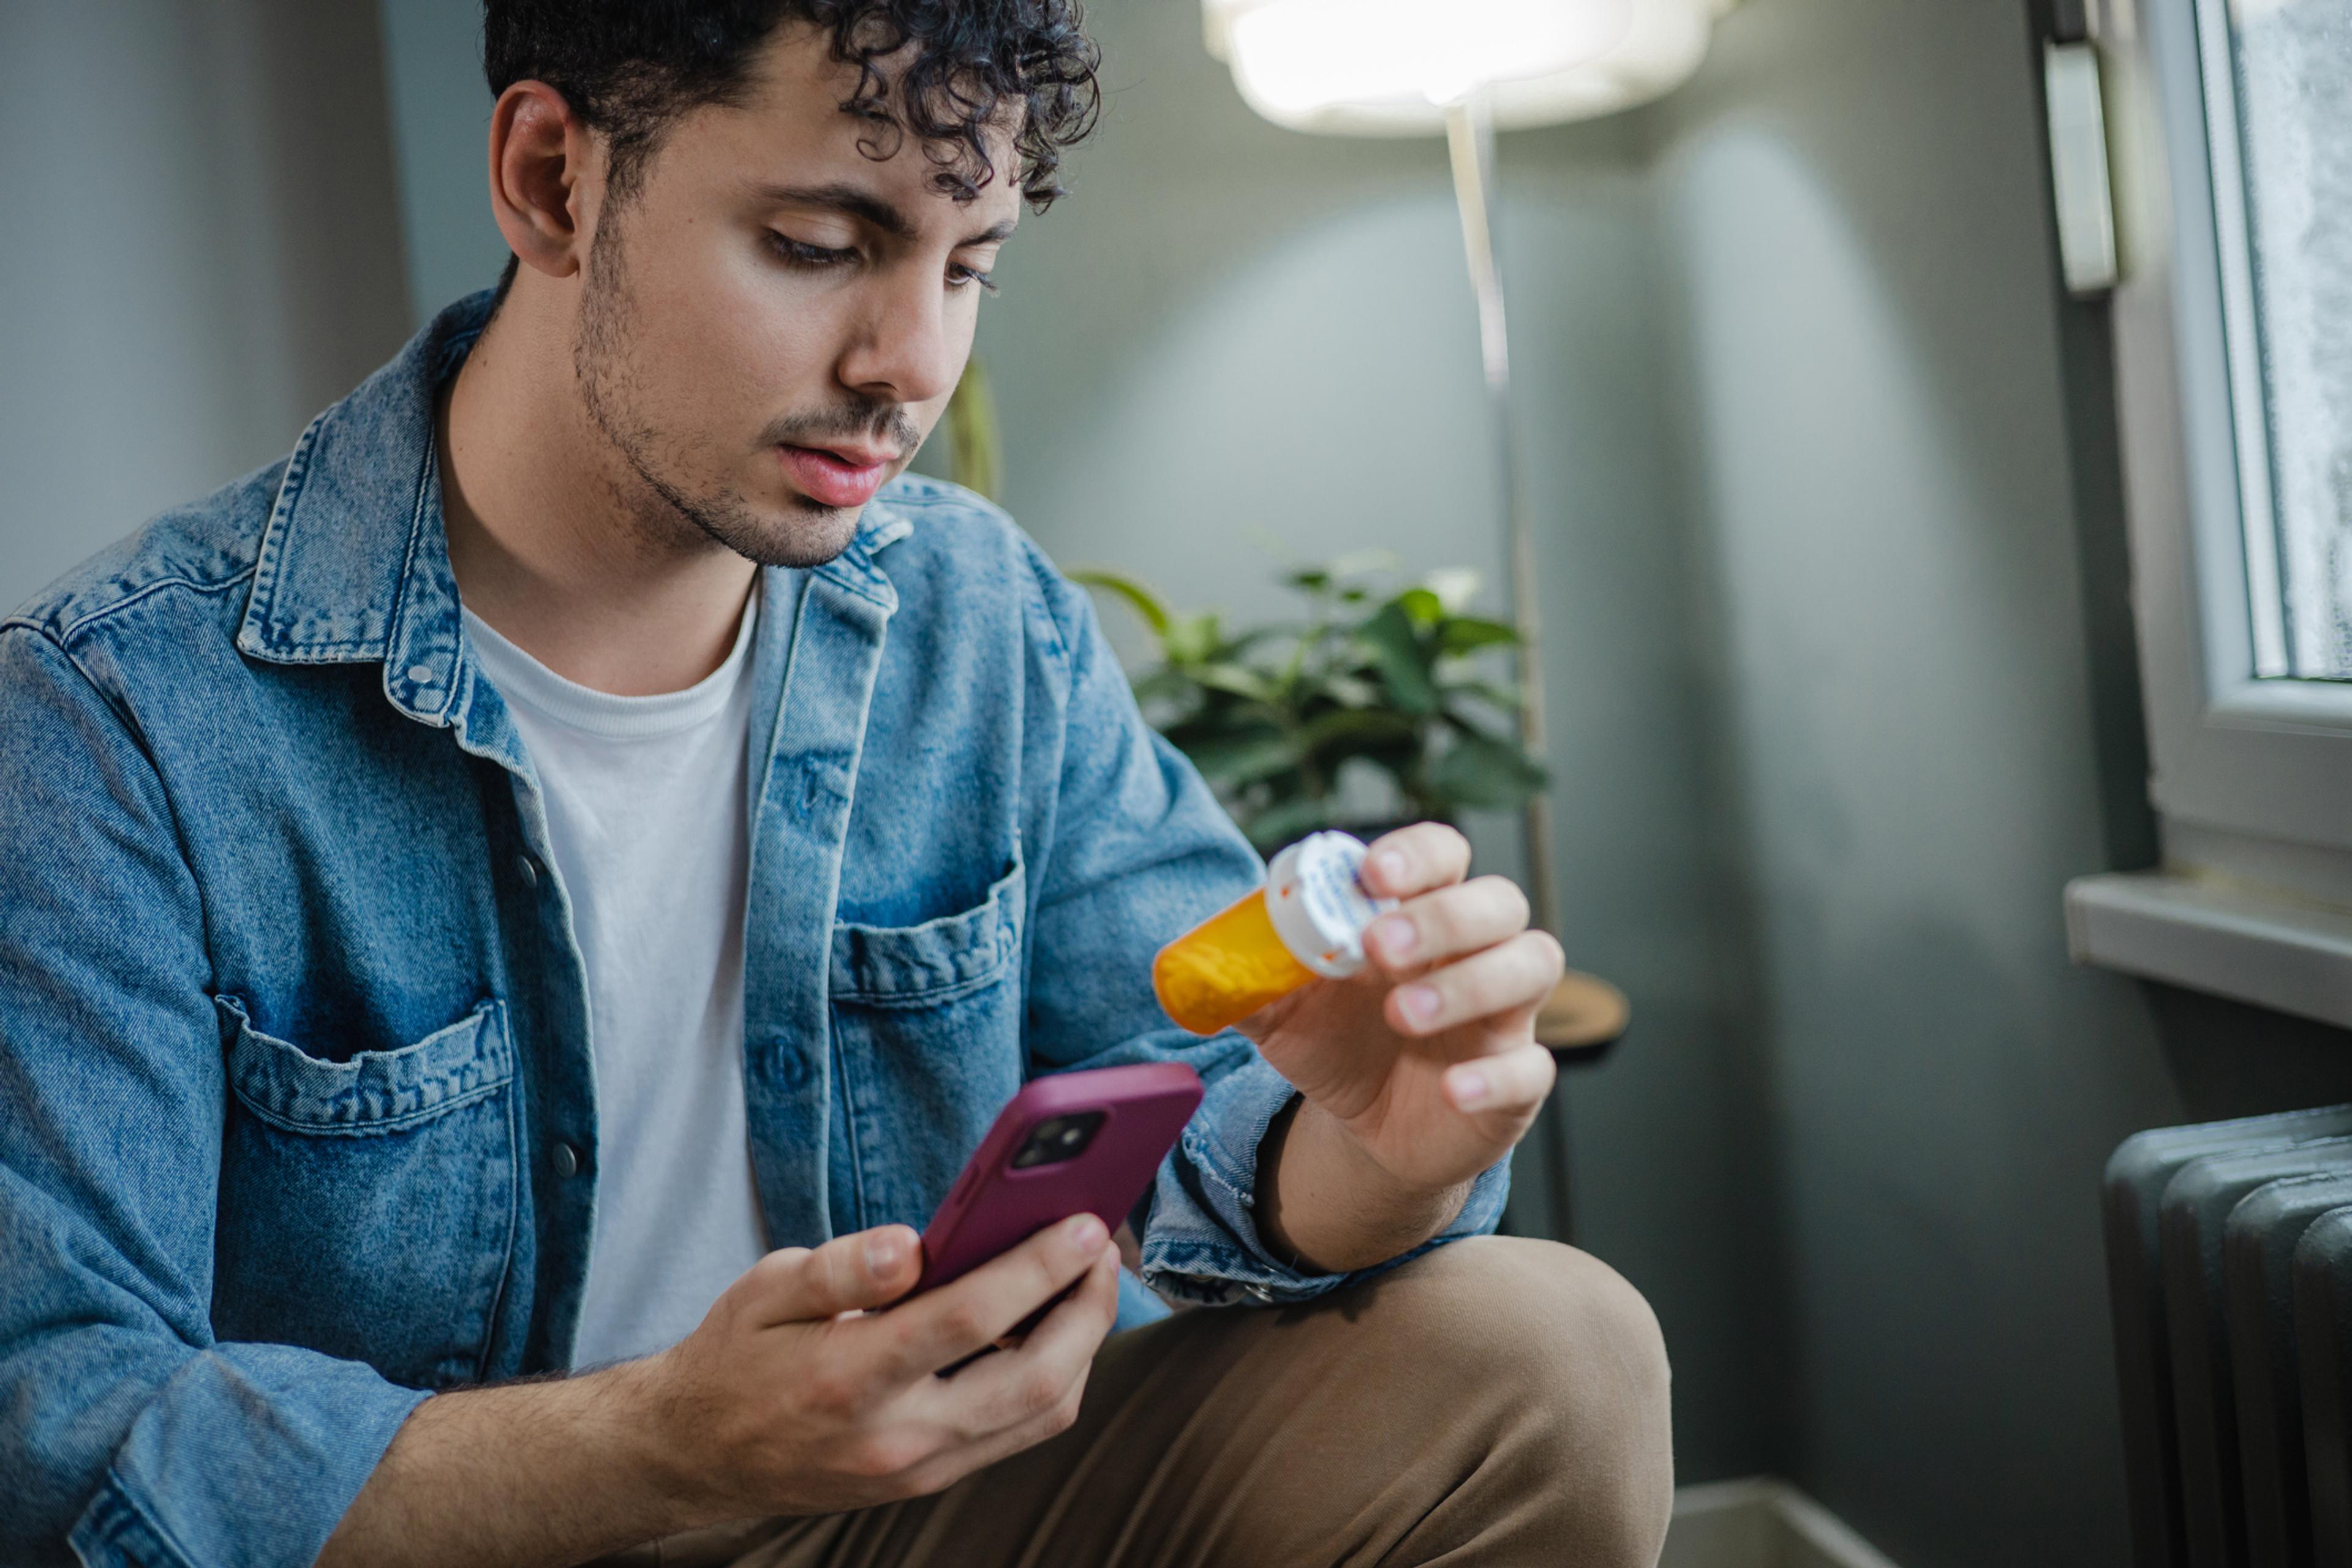 Young man looks at a prescription drug label